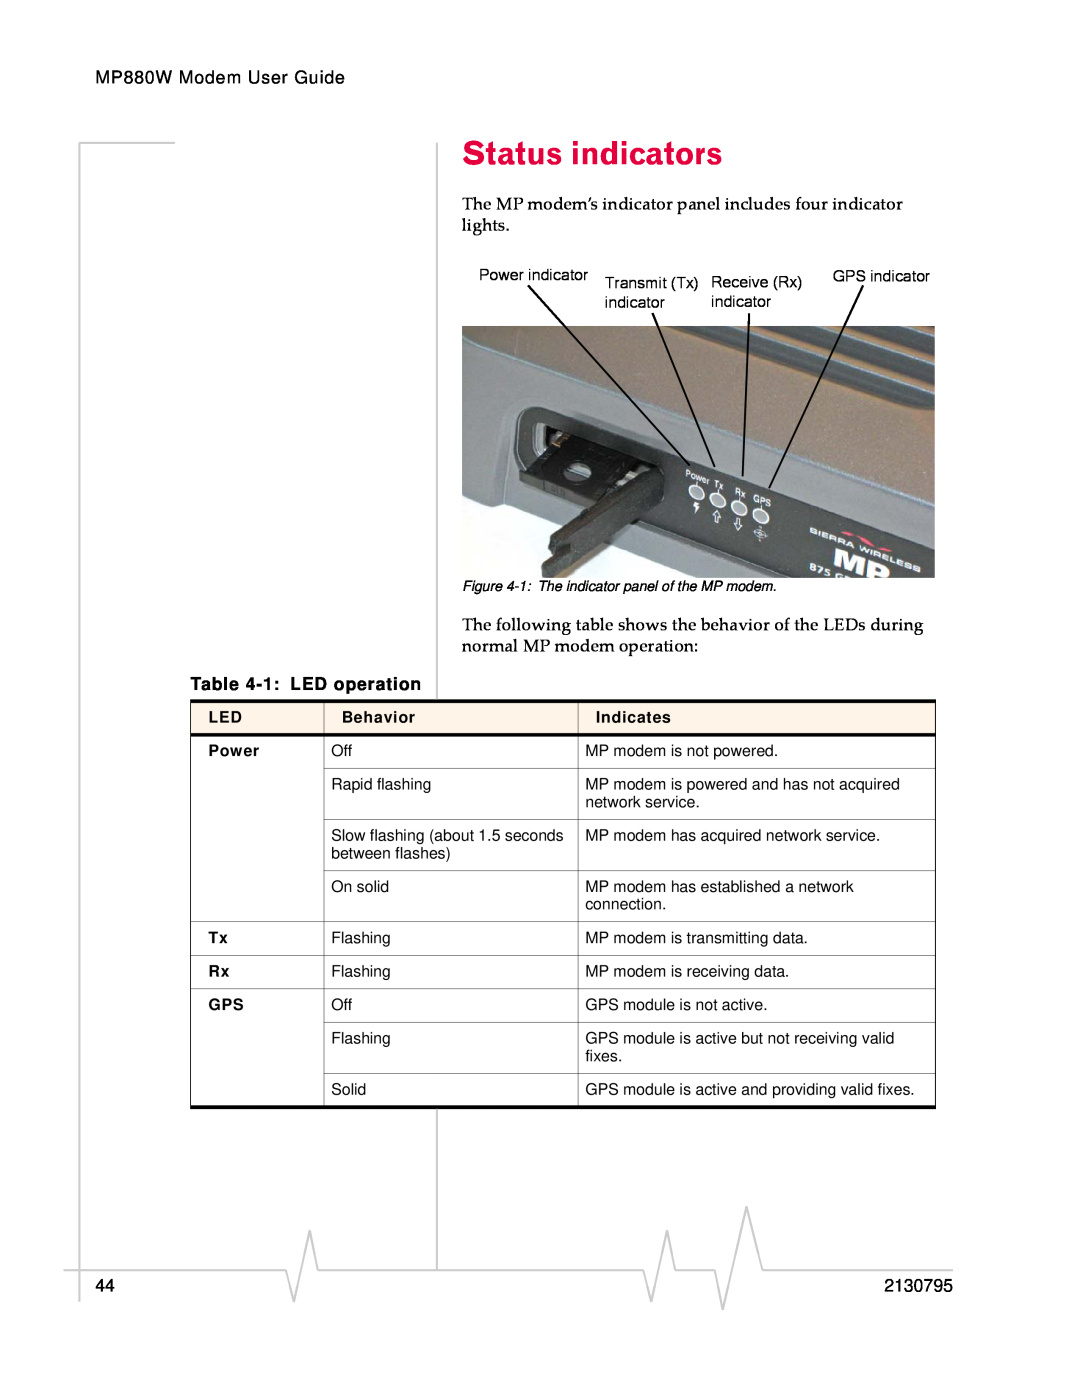 Sierra Wireless MP 880W manual Status indicators, MP880W Modem User Guide, 1 LED operation, 2130795 